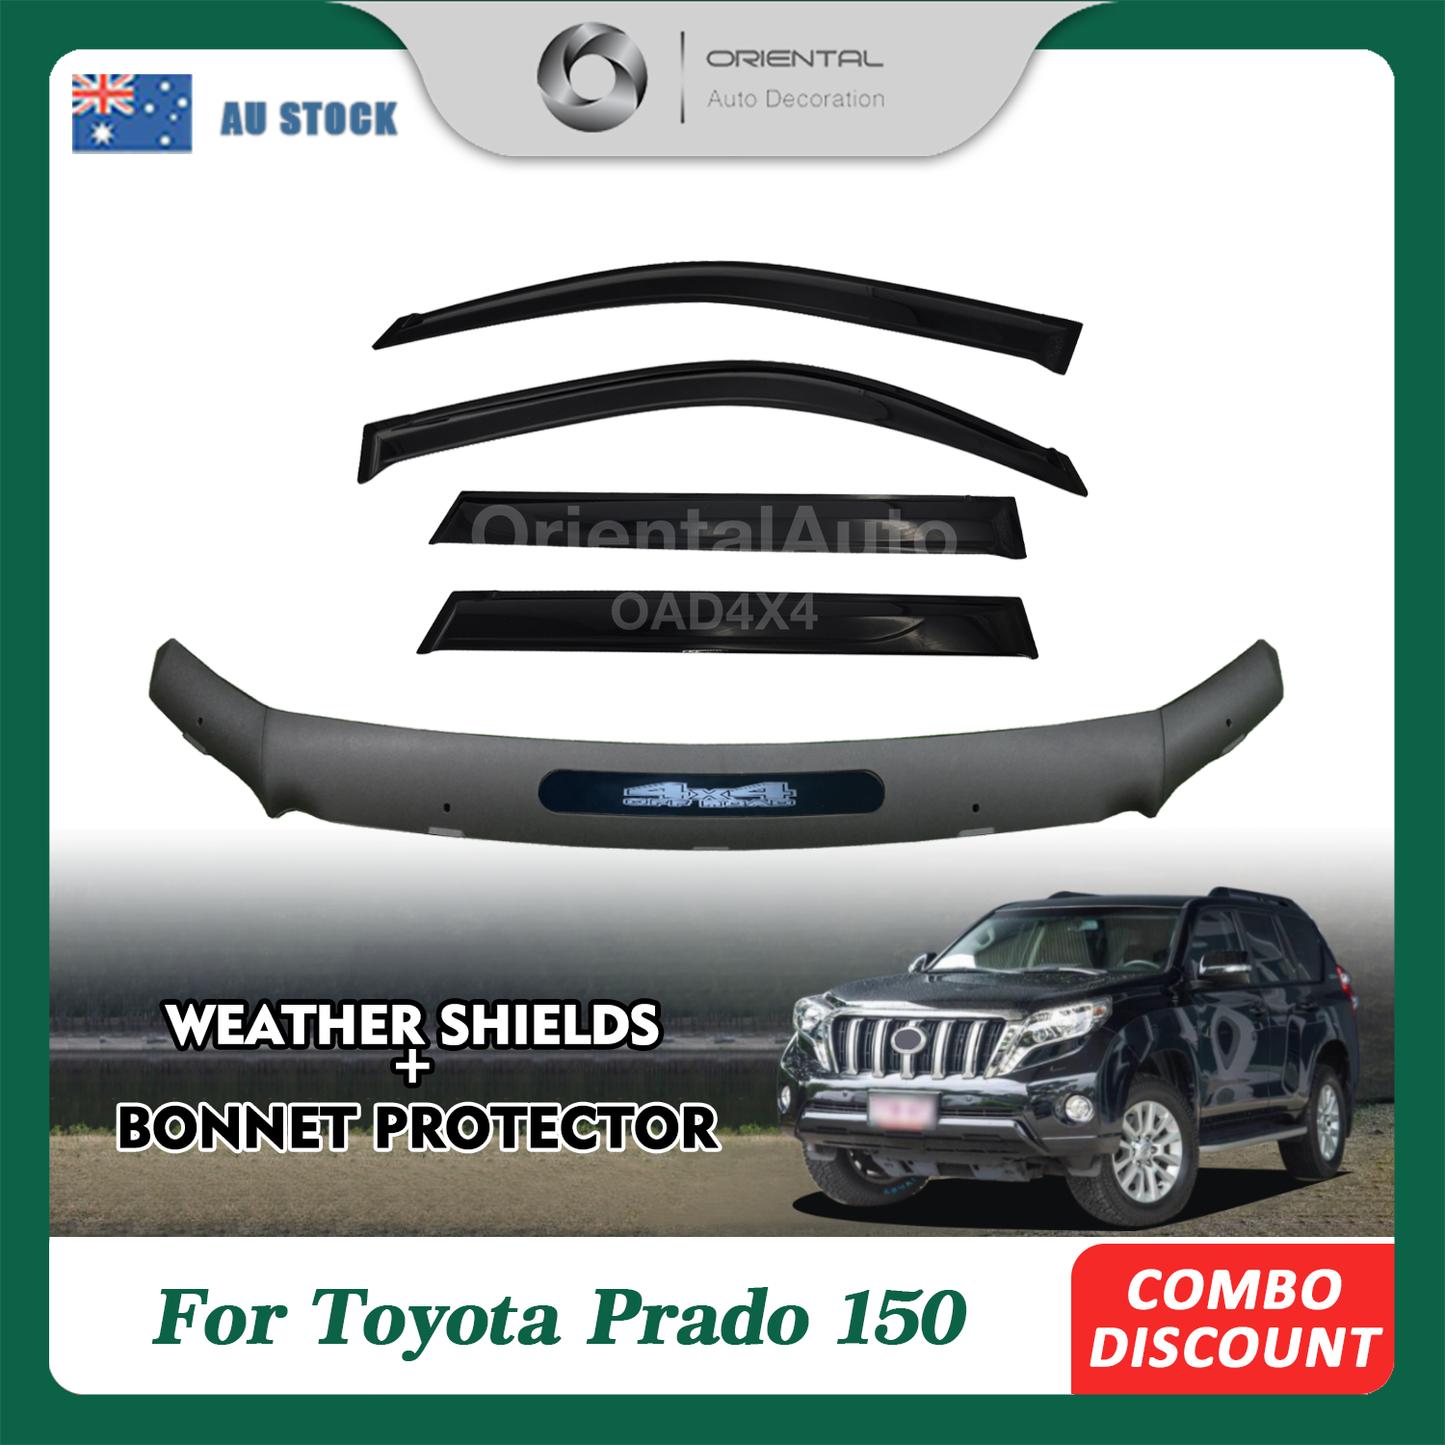 Injection Modeling Bonnet Protector & Premium Weathershield for Toyota  Prado 150 2013-2017  Weather Shields Window Visor + Hood Protector Bonnet Guard